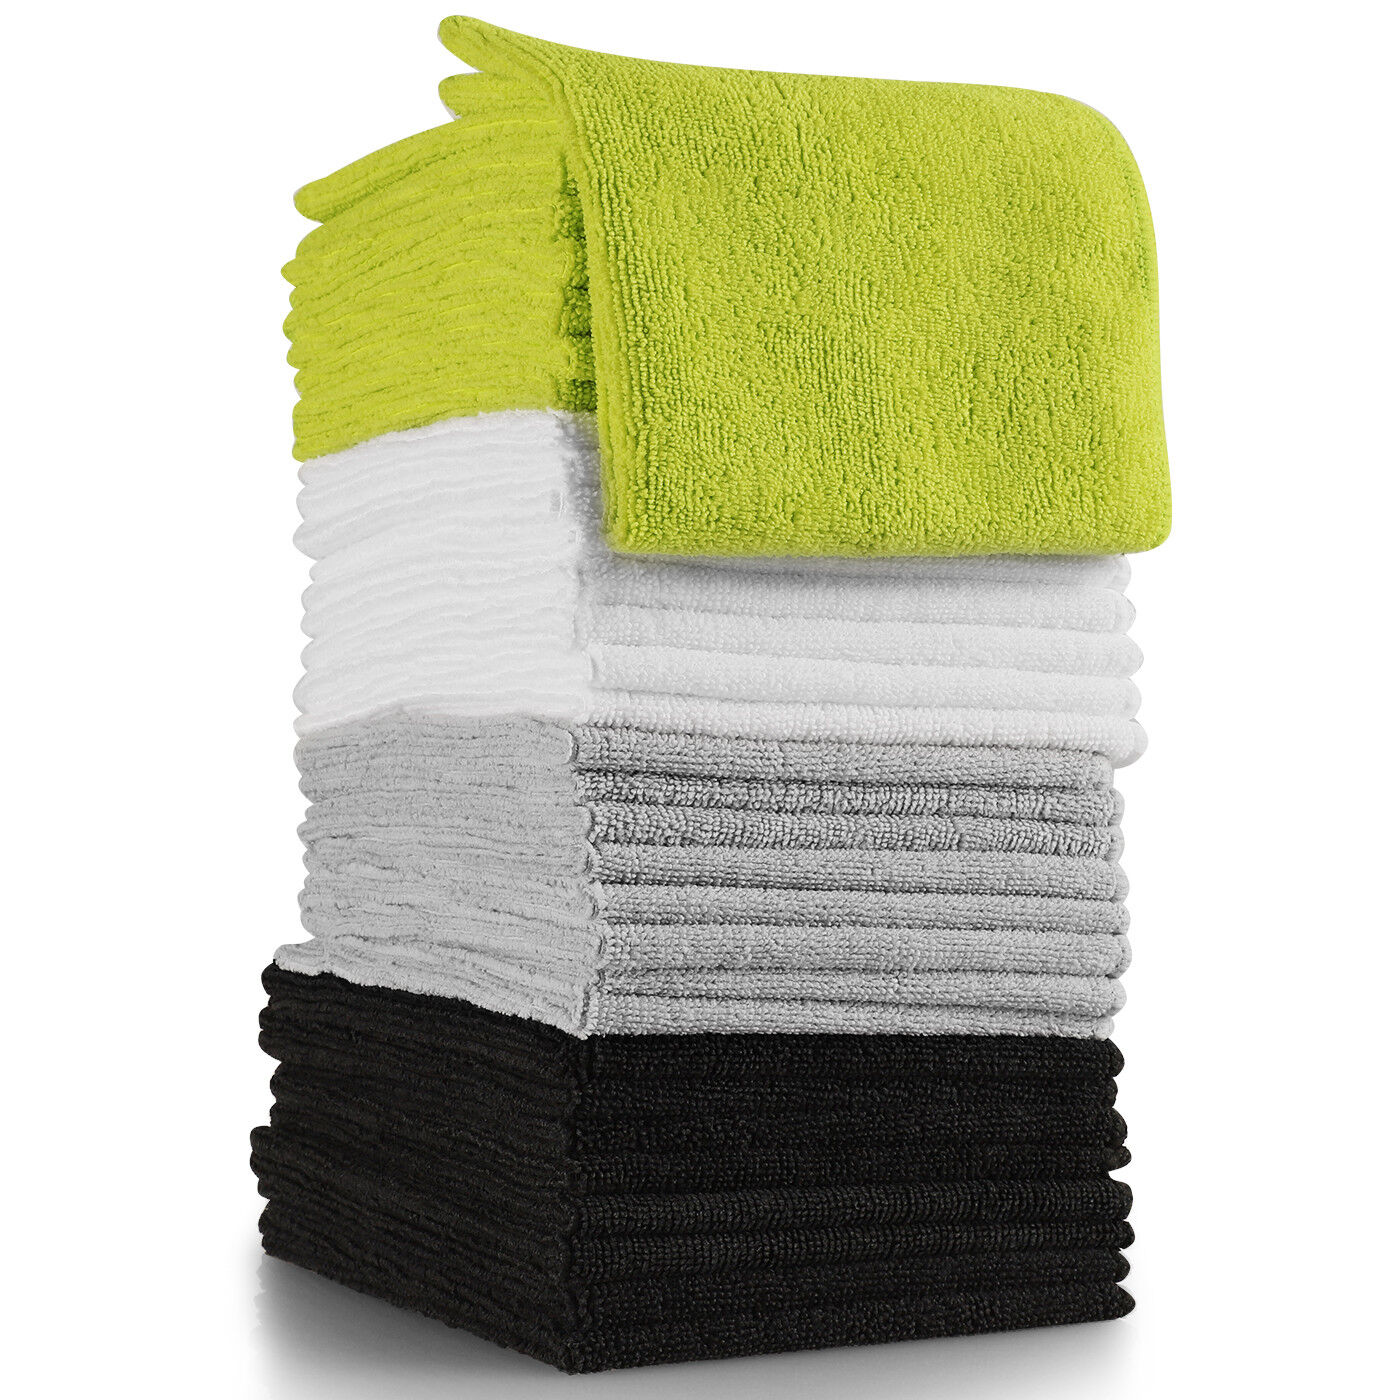 Microfiber Cleaning Cloth 32 Pack Set Towel Duster Rag for Car Truck Van SUV